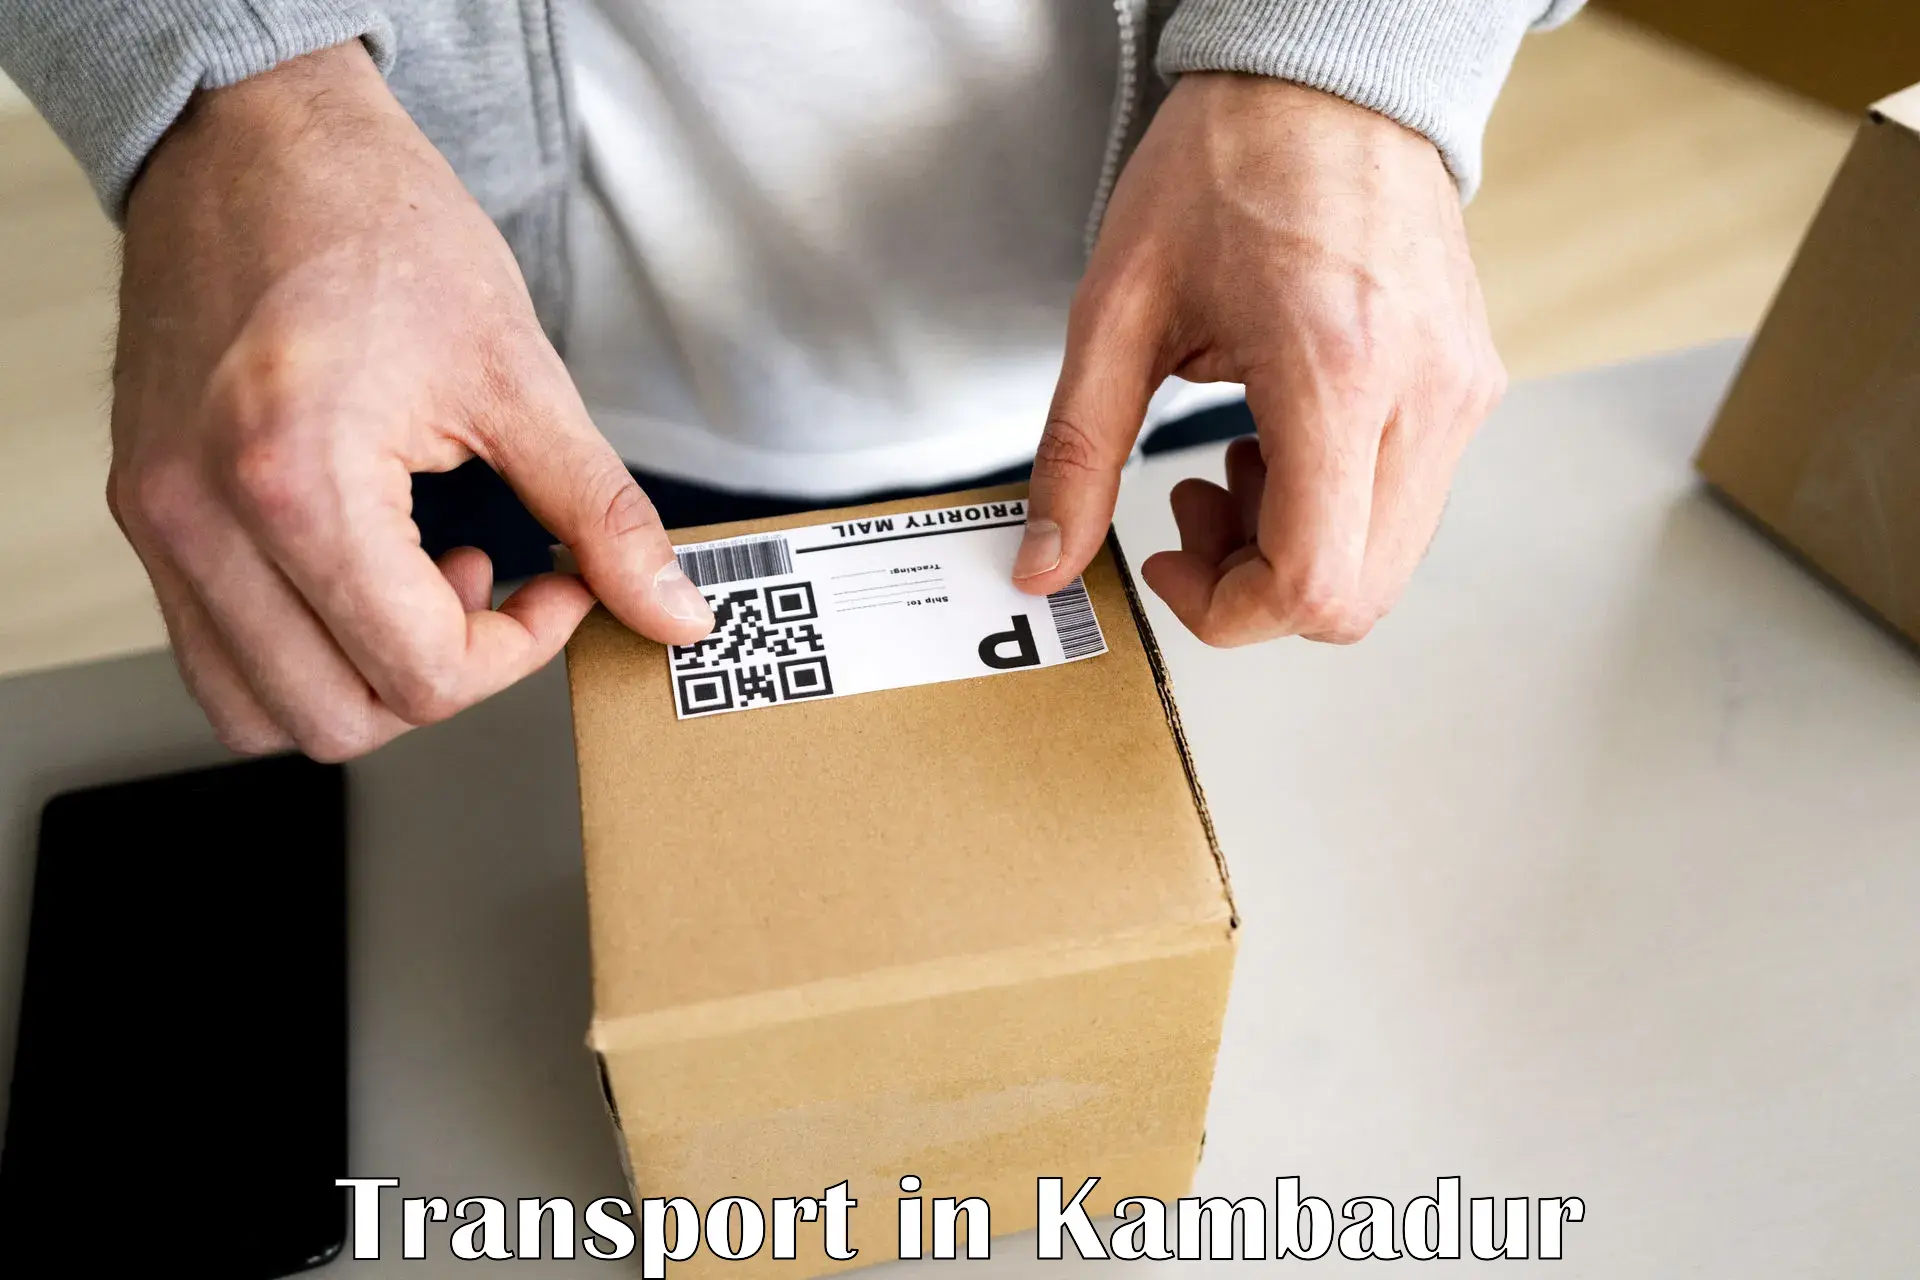 Goods transport services in Kambadur